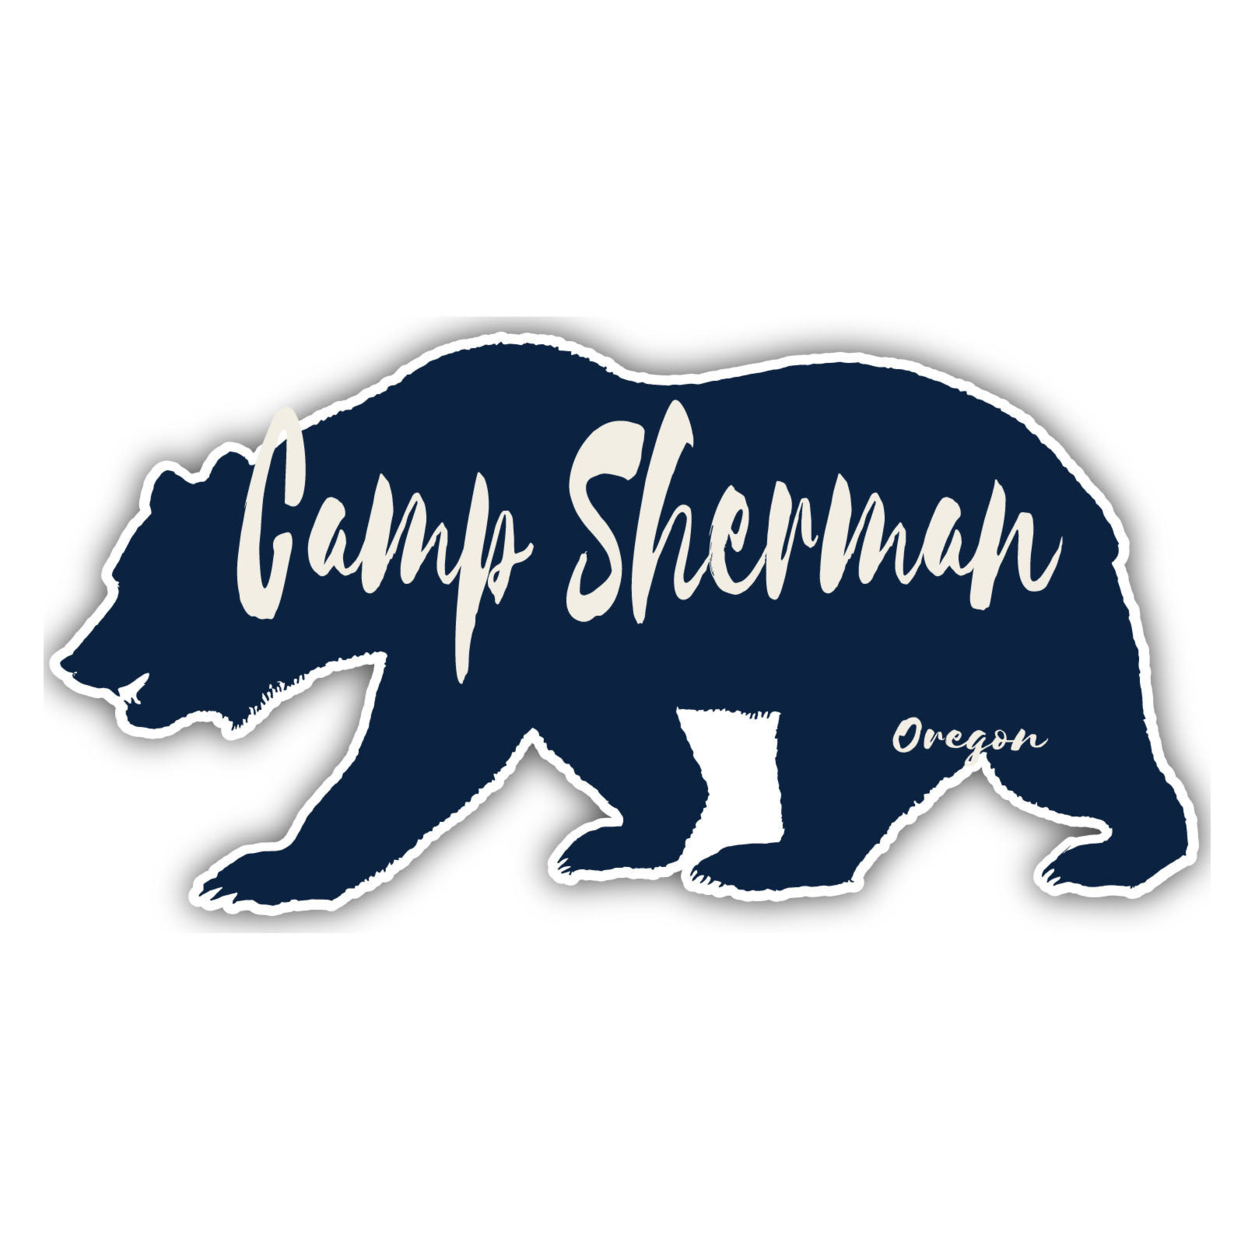 Camp Sherman Oregon Souvenir Decorative Stickers (Choose Theme And Size) - Single Unit, 12-Inch, Bear